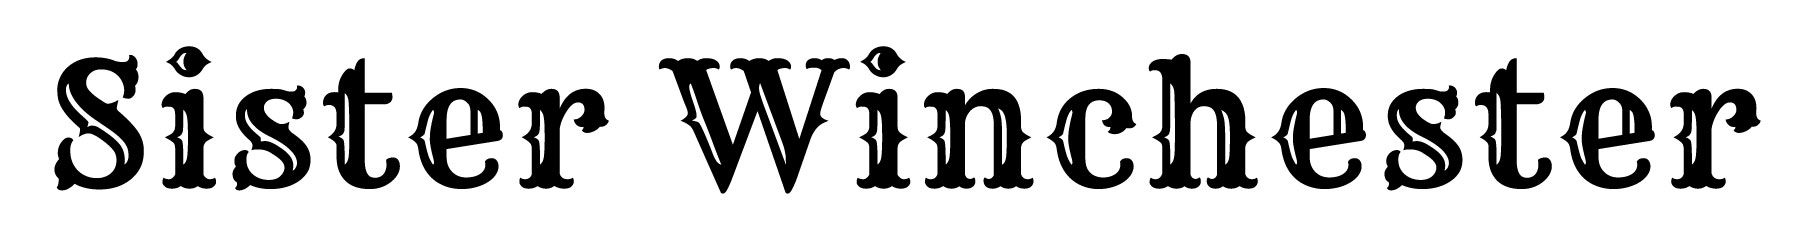 Sister Winchester Logo